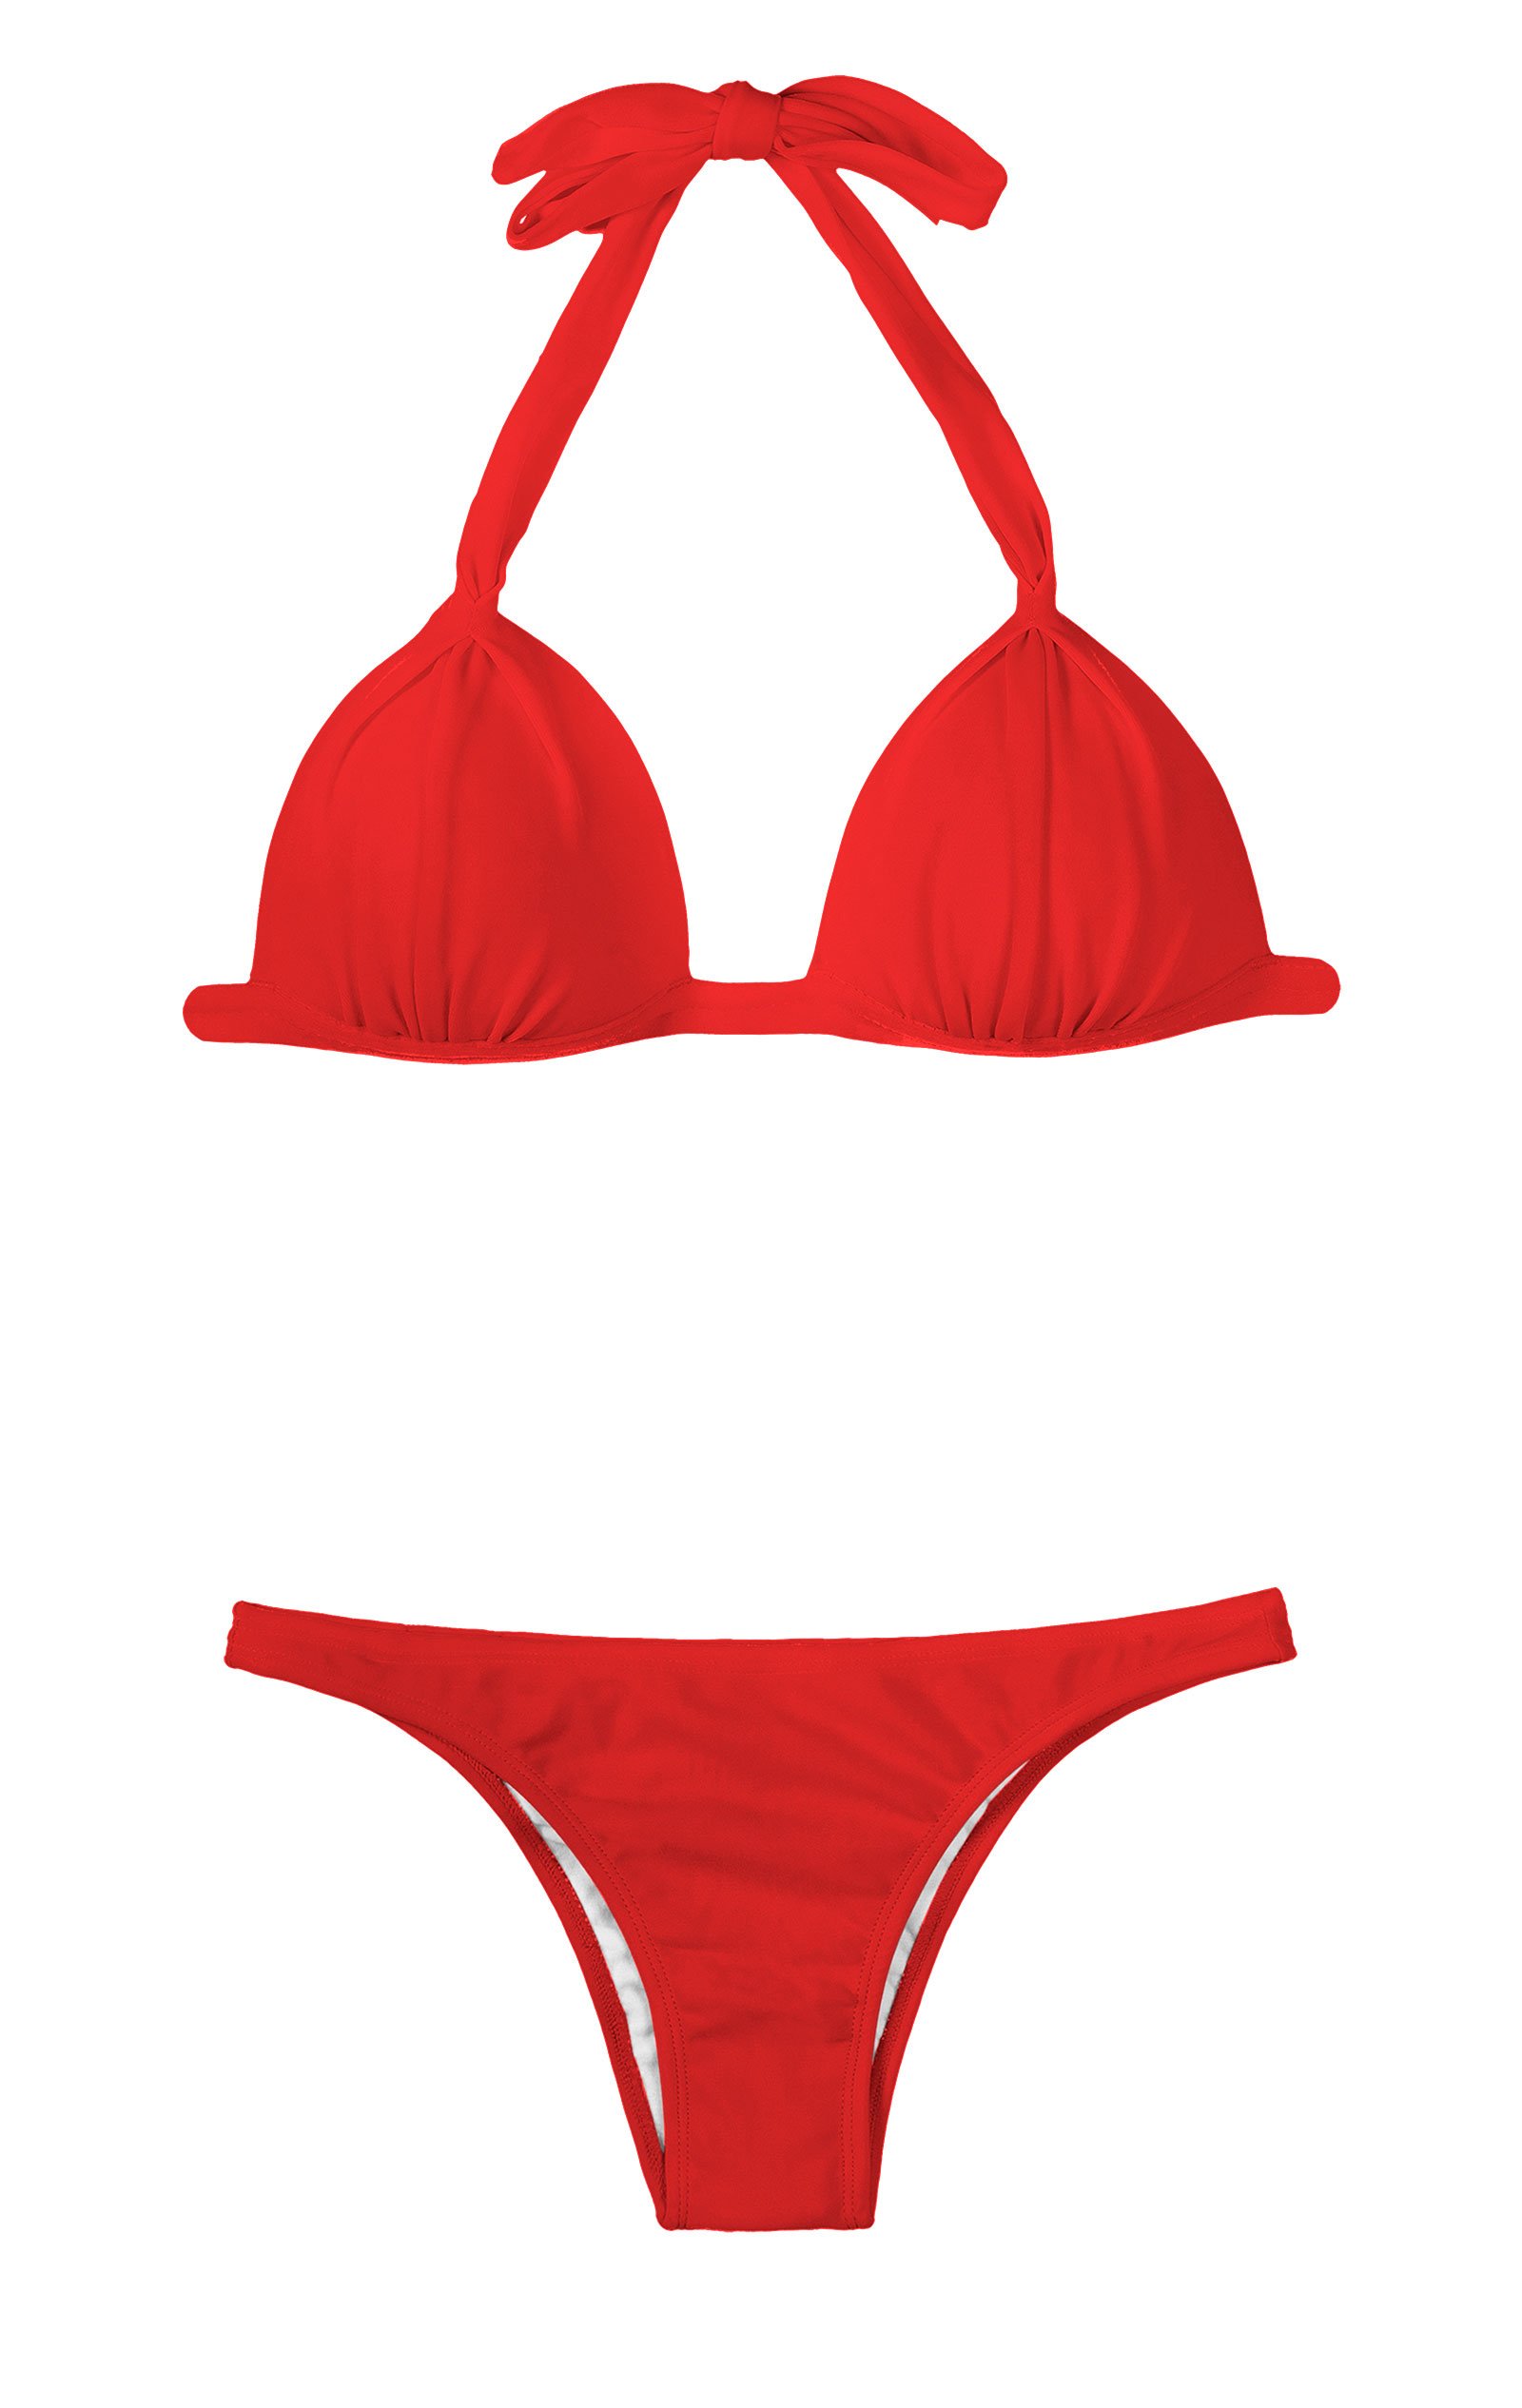 Red Bikini Red Bikini Bikinis Red Bikini Set My Xxx Hot Girl